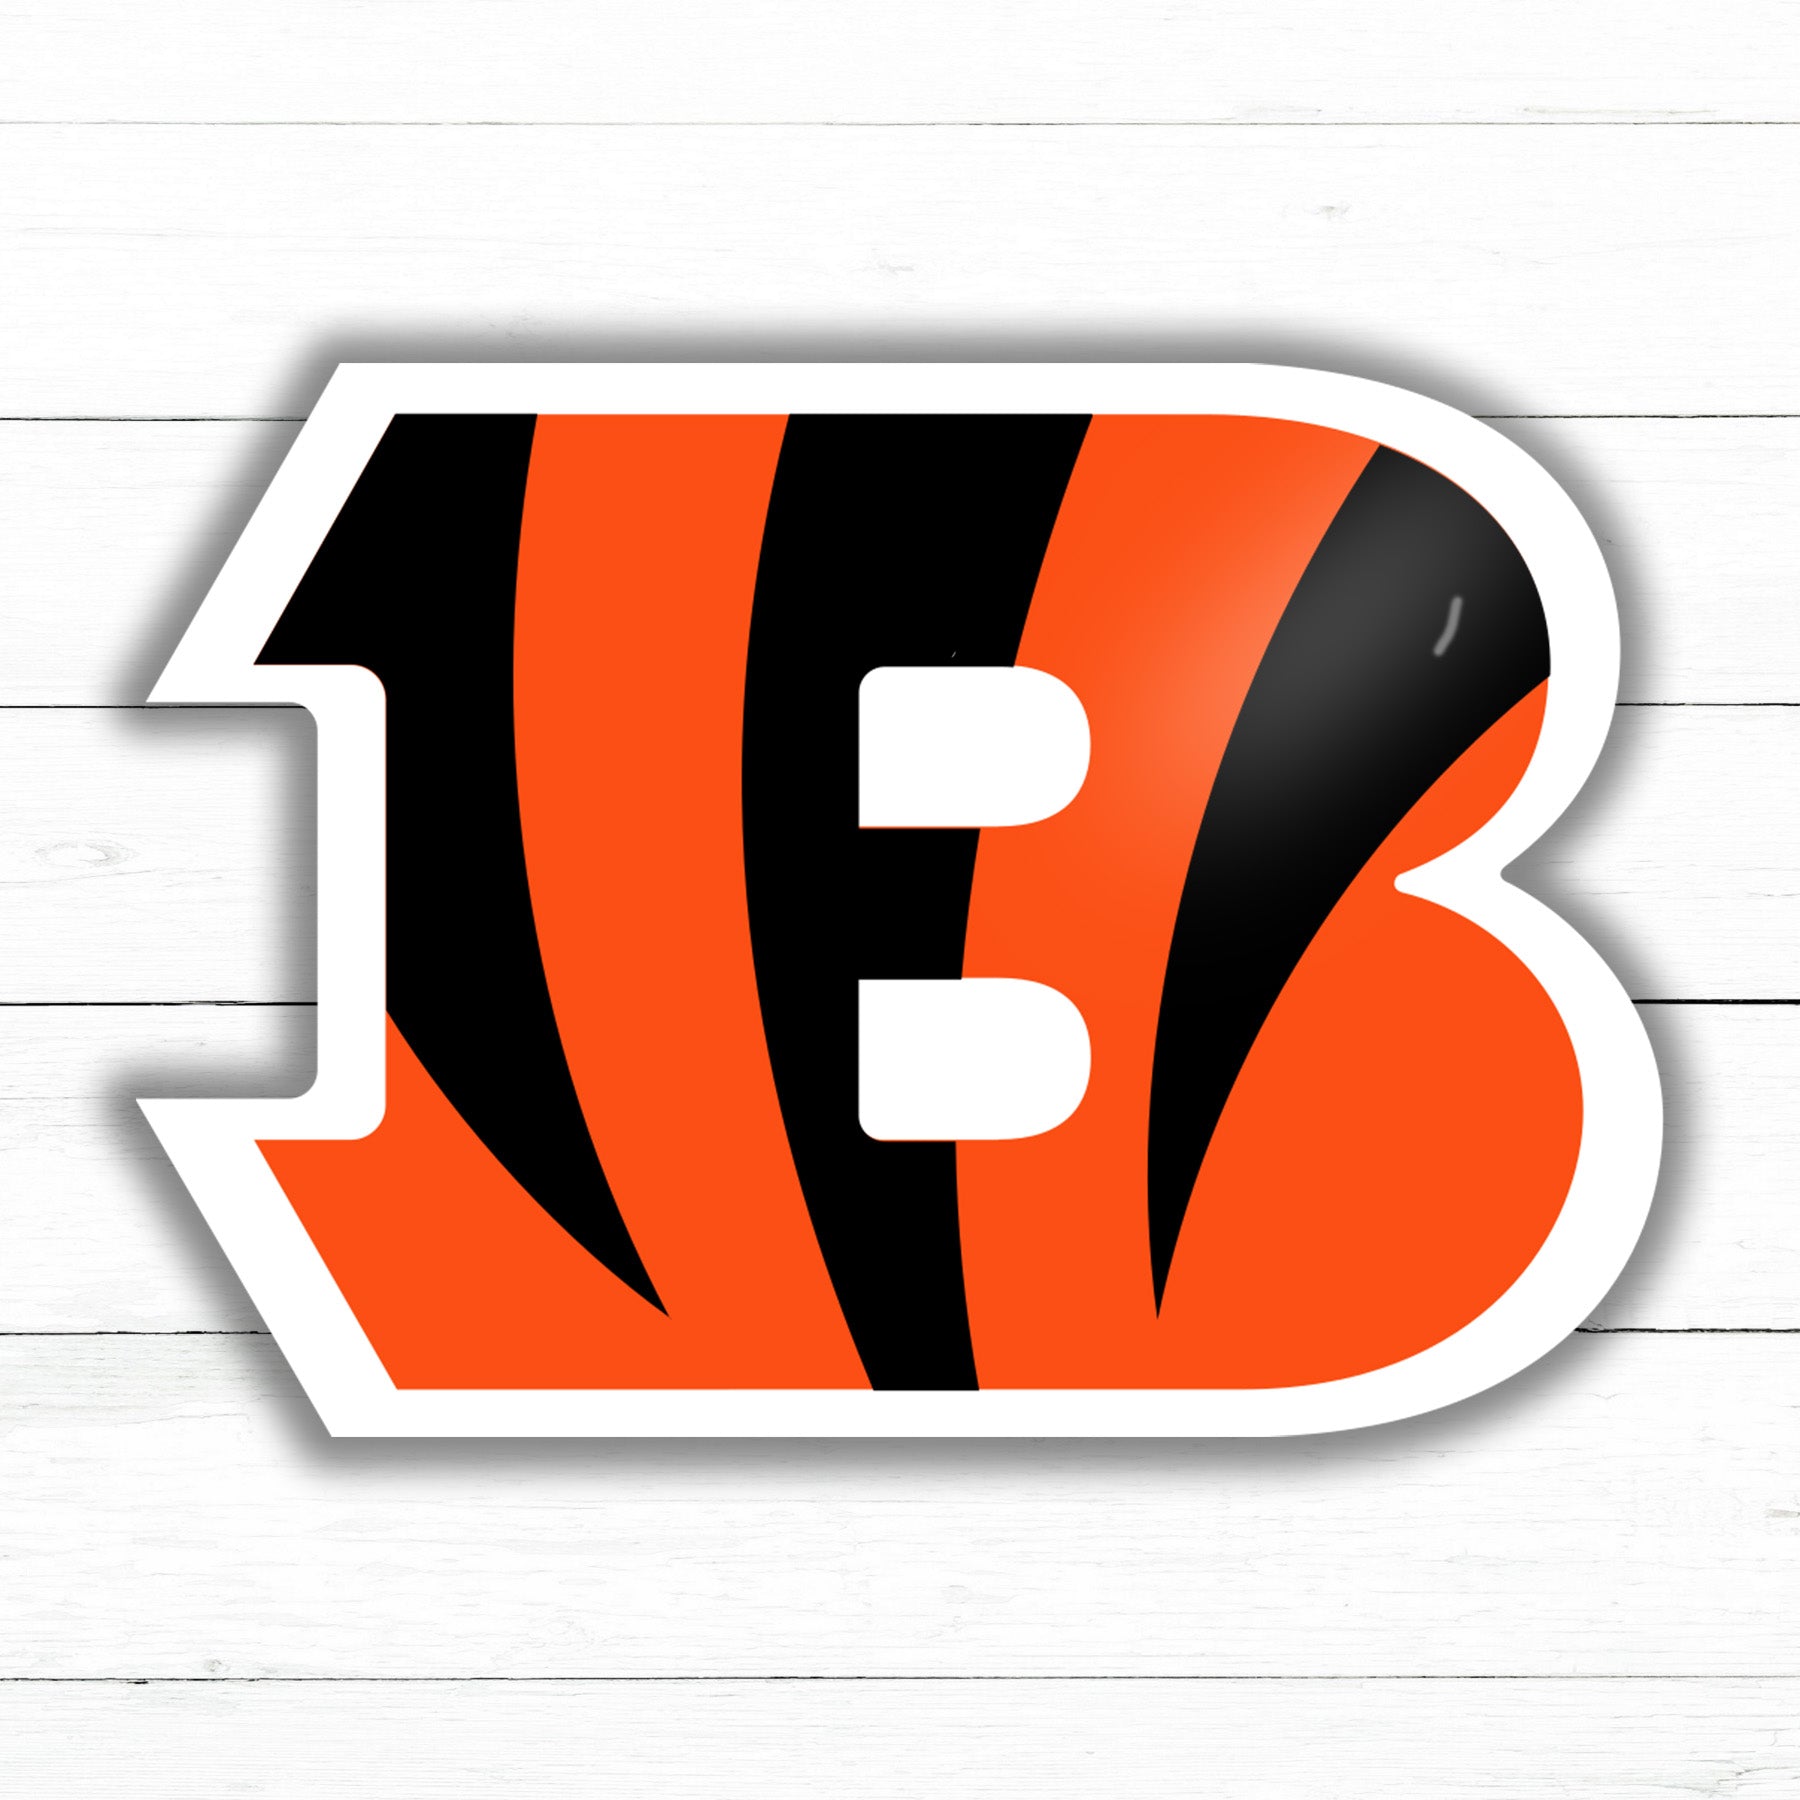 Cincinnati Bengals Logo Stickers for Sale